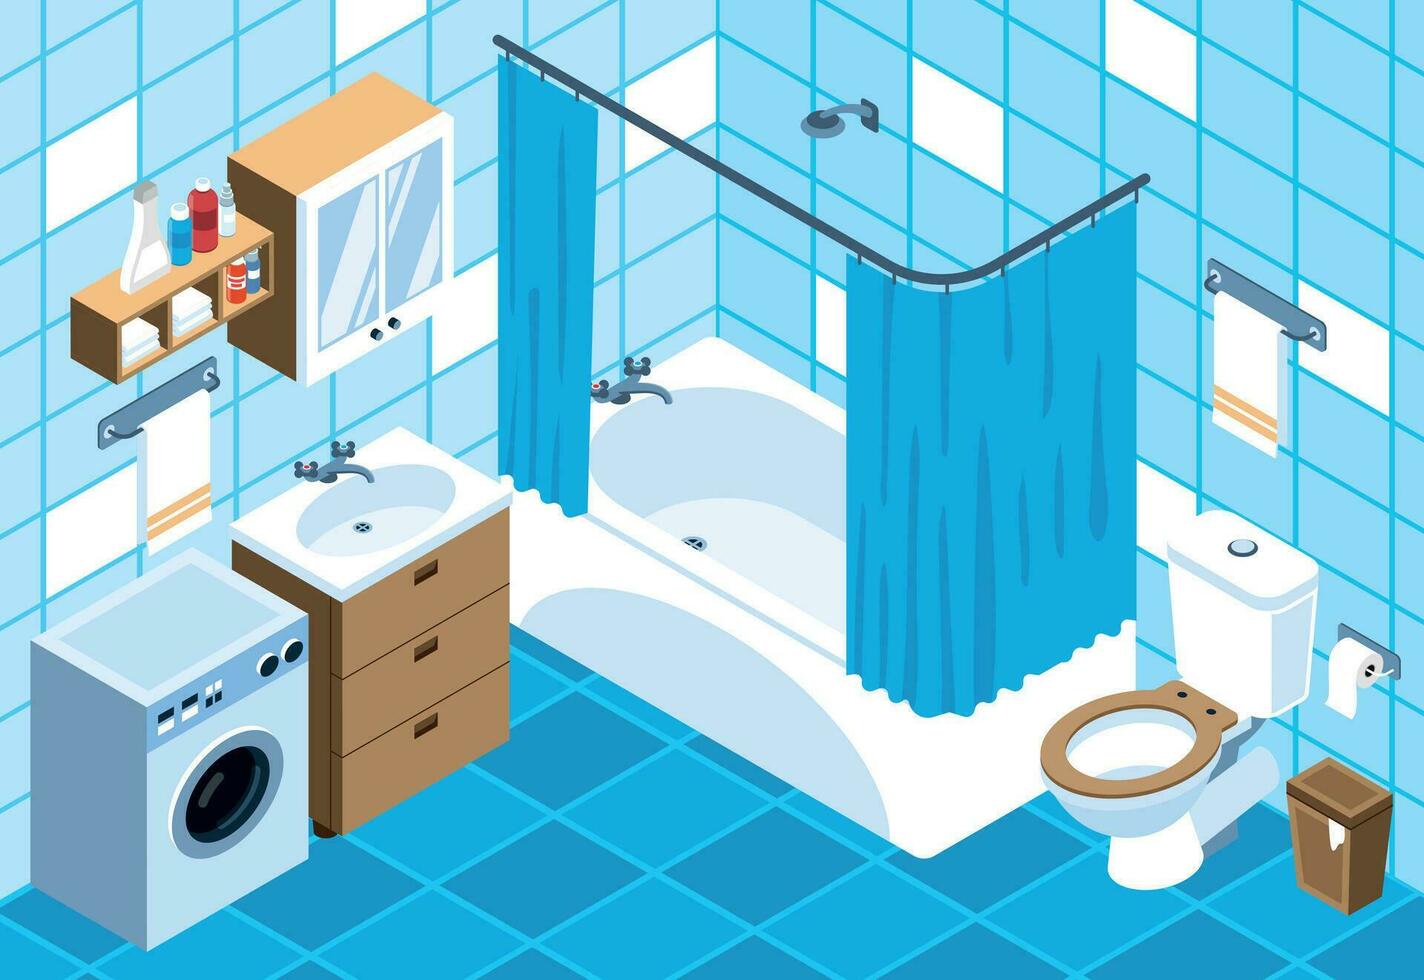 Bathroom Isometric Illustration vector